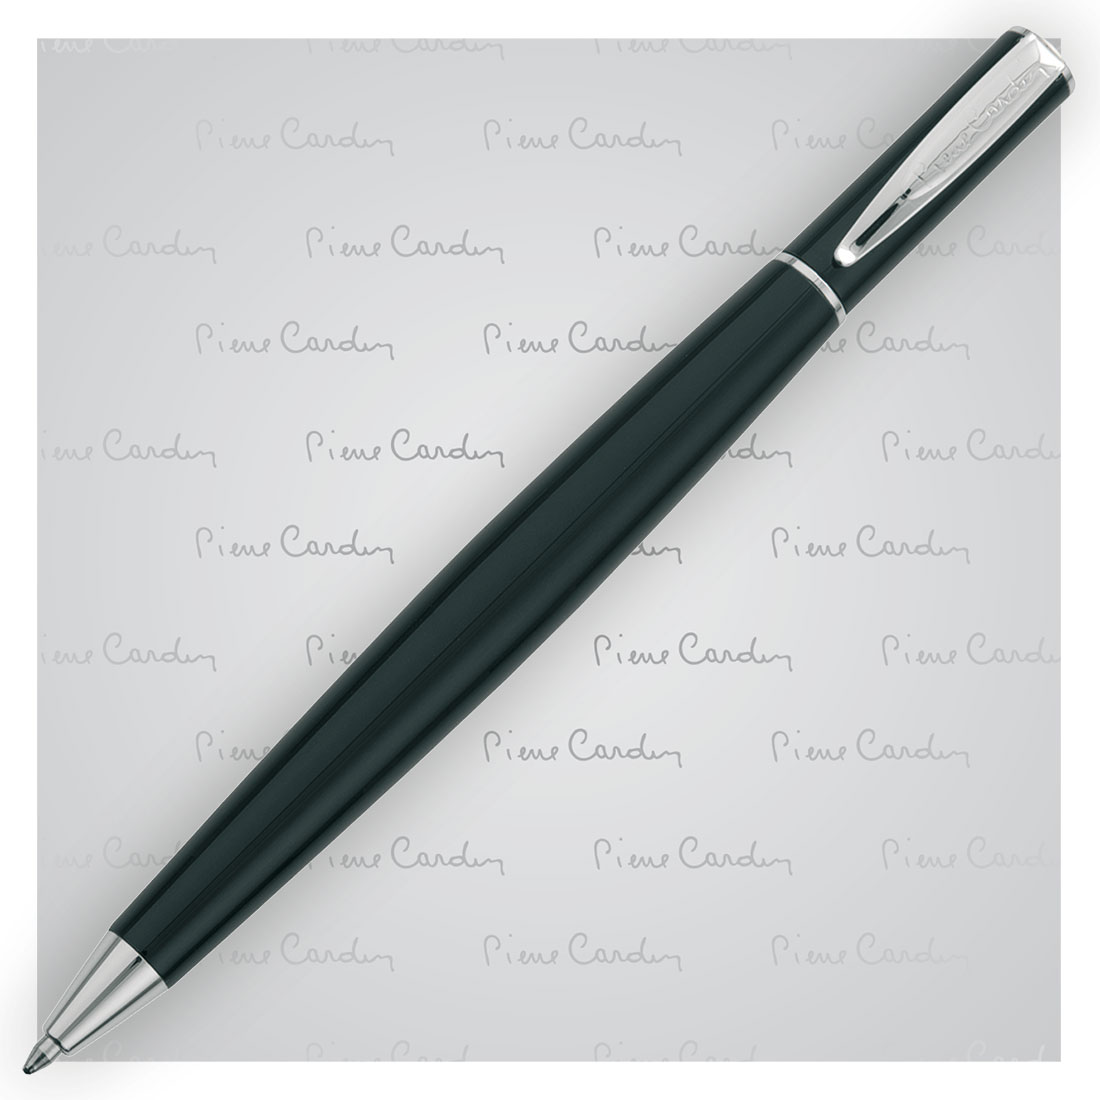 Długopis metalowy MATIGNON Pierre Cardin